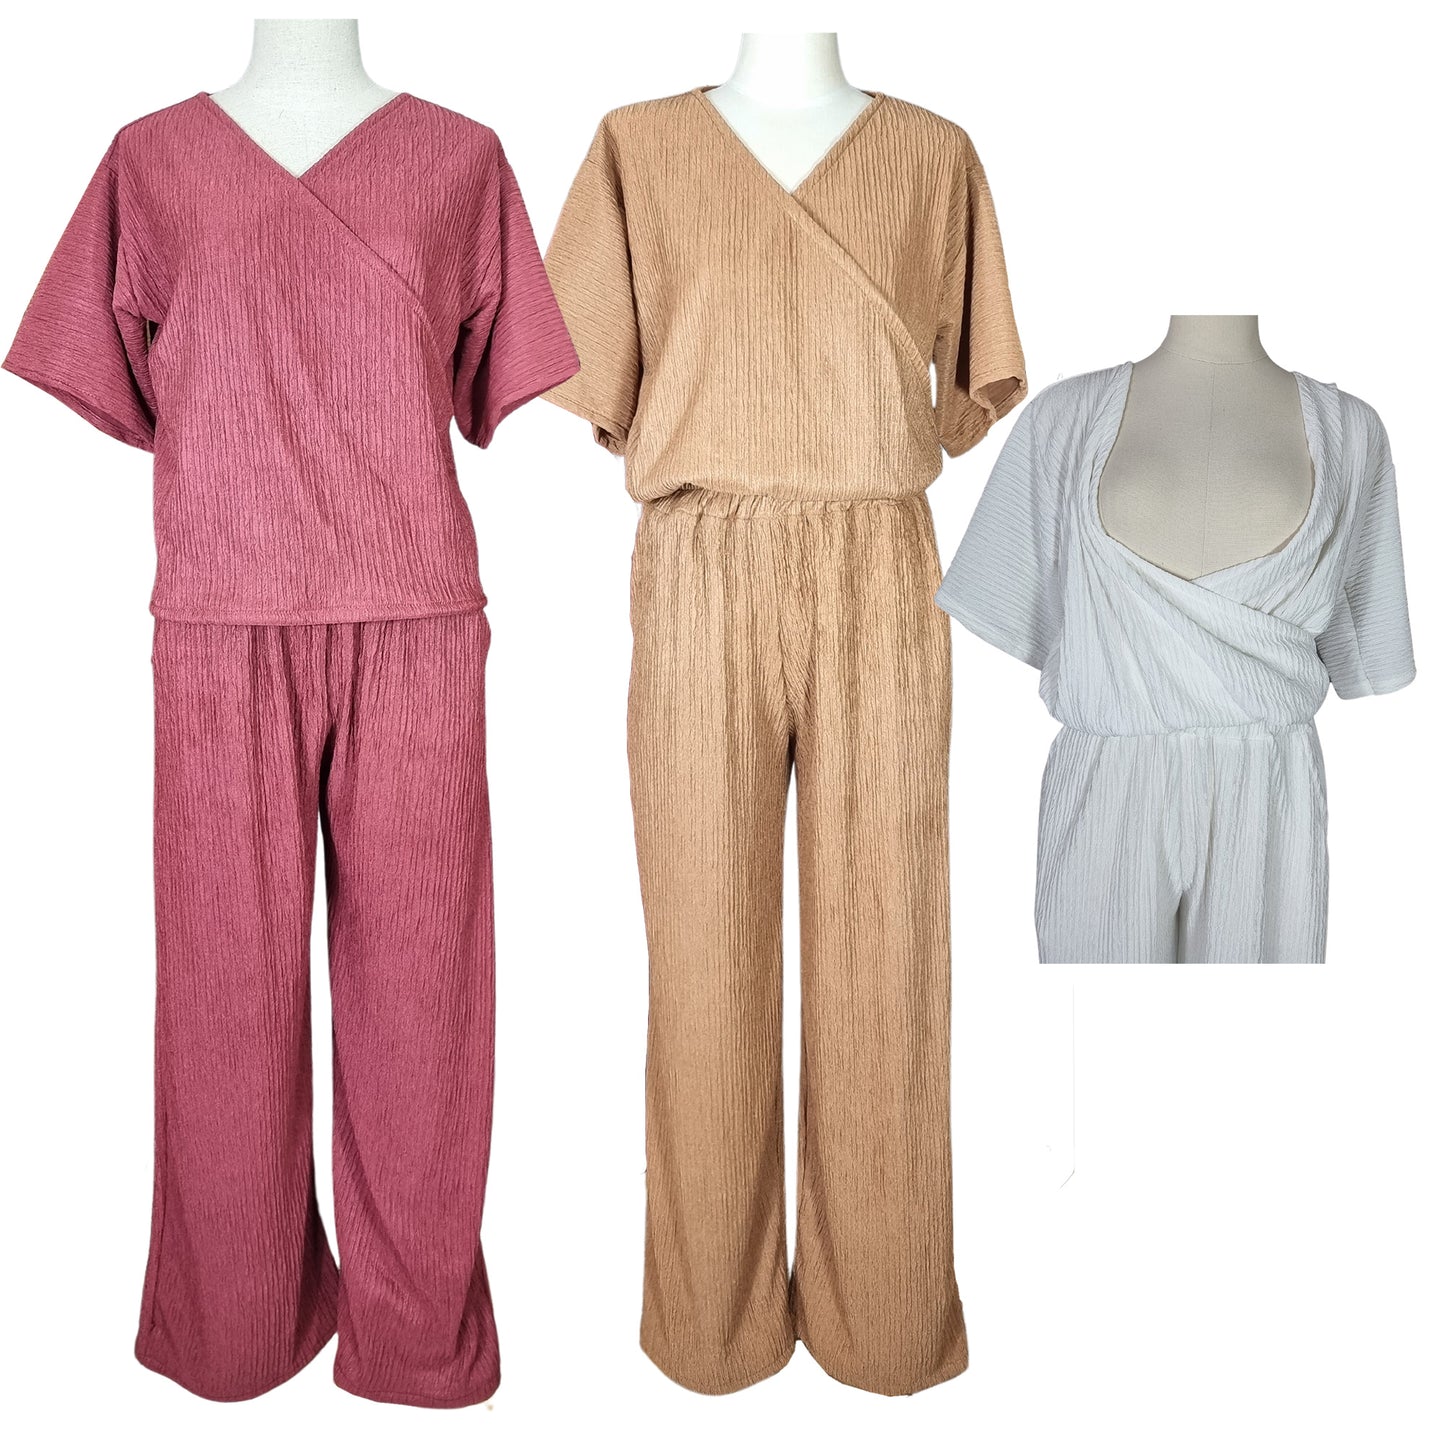 Tasha Top and Pants Coordinates,  Nursing Lounge Wear,  Breastfeeding Terno